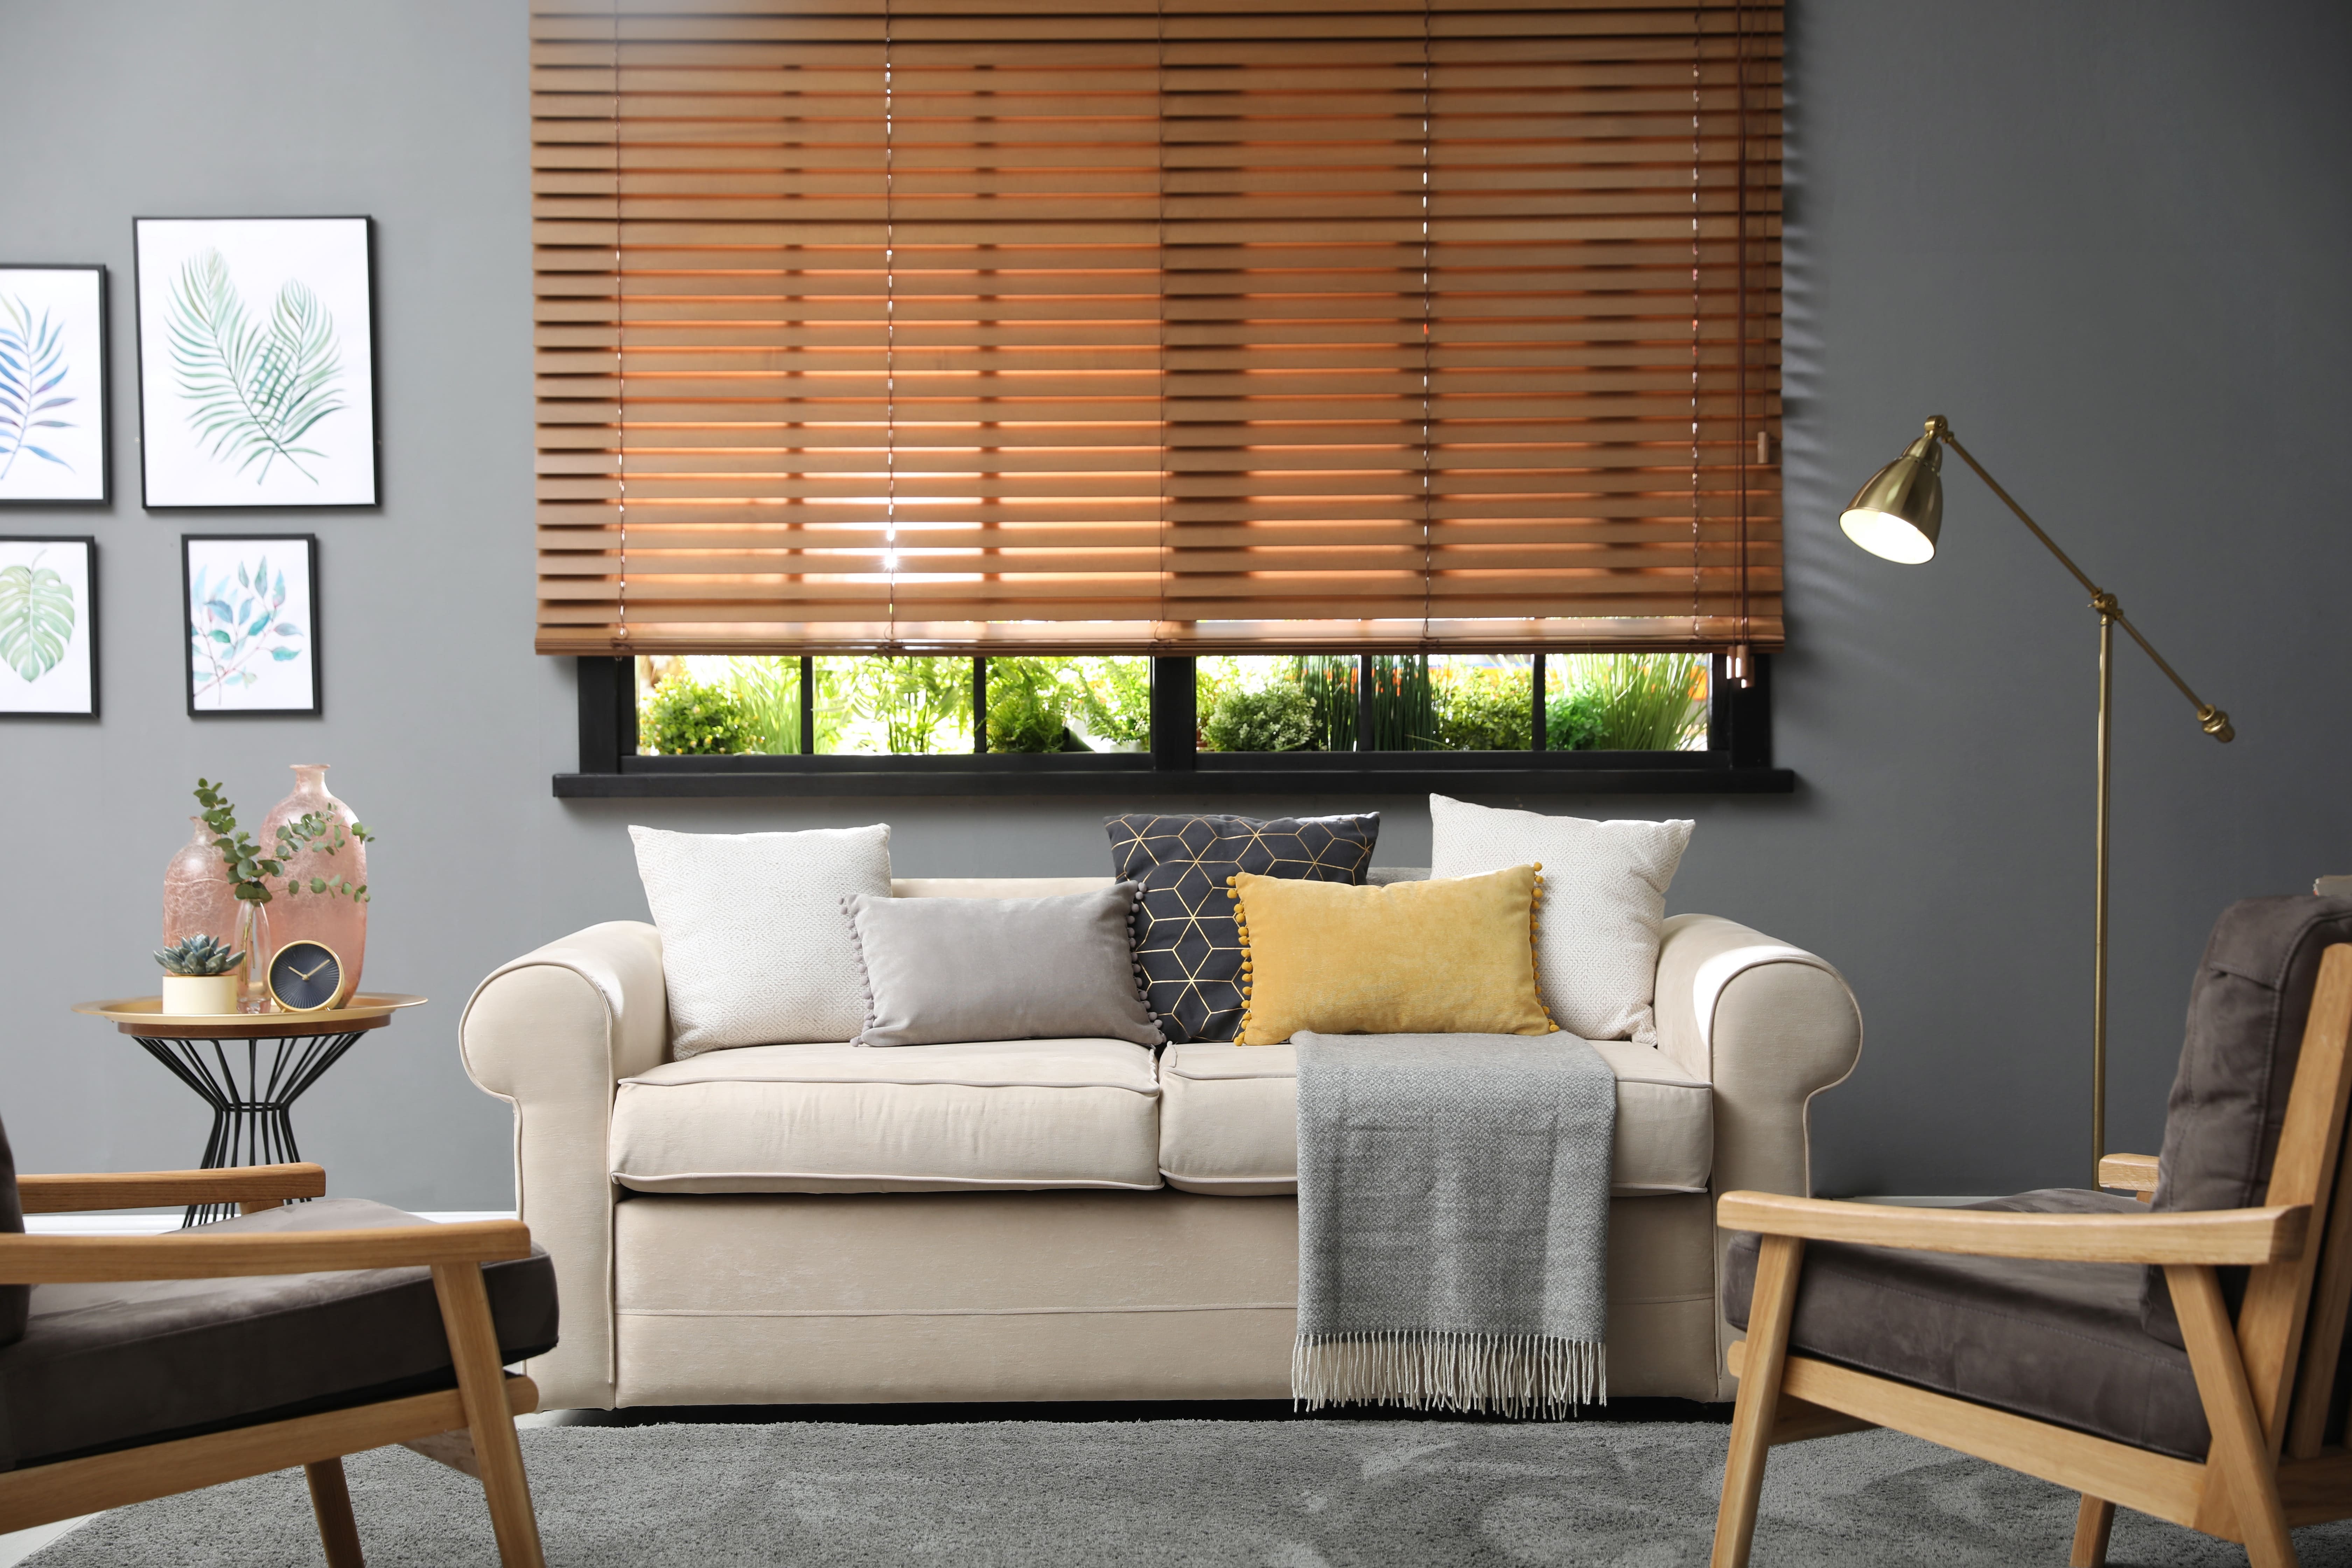 Home interior designer in Bangalore - Small Living Room Interior Design Ideas for your Home - Decorpot 